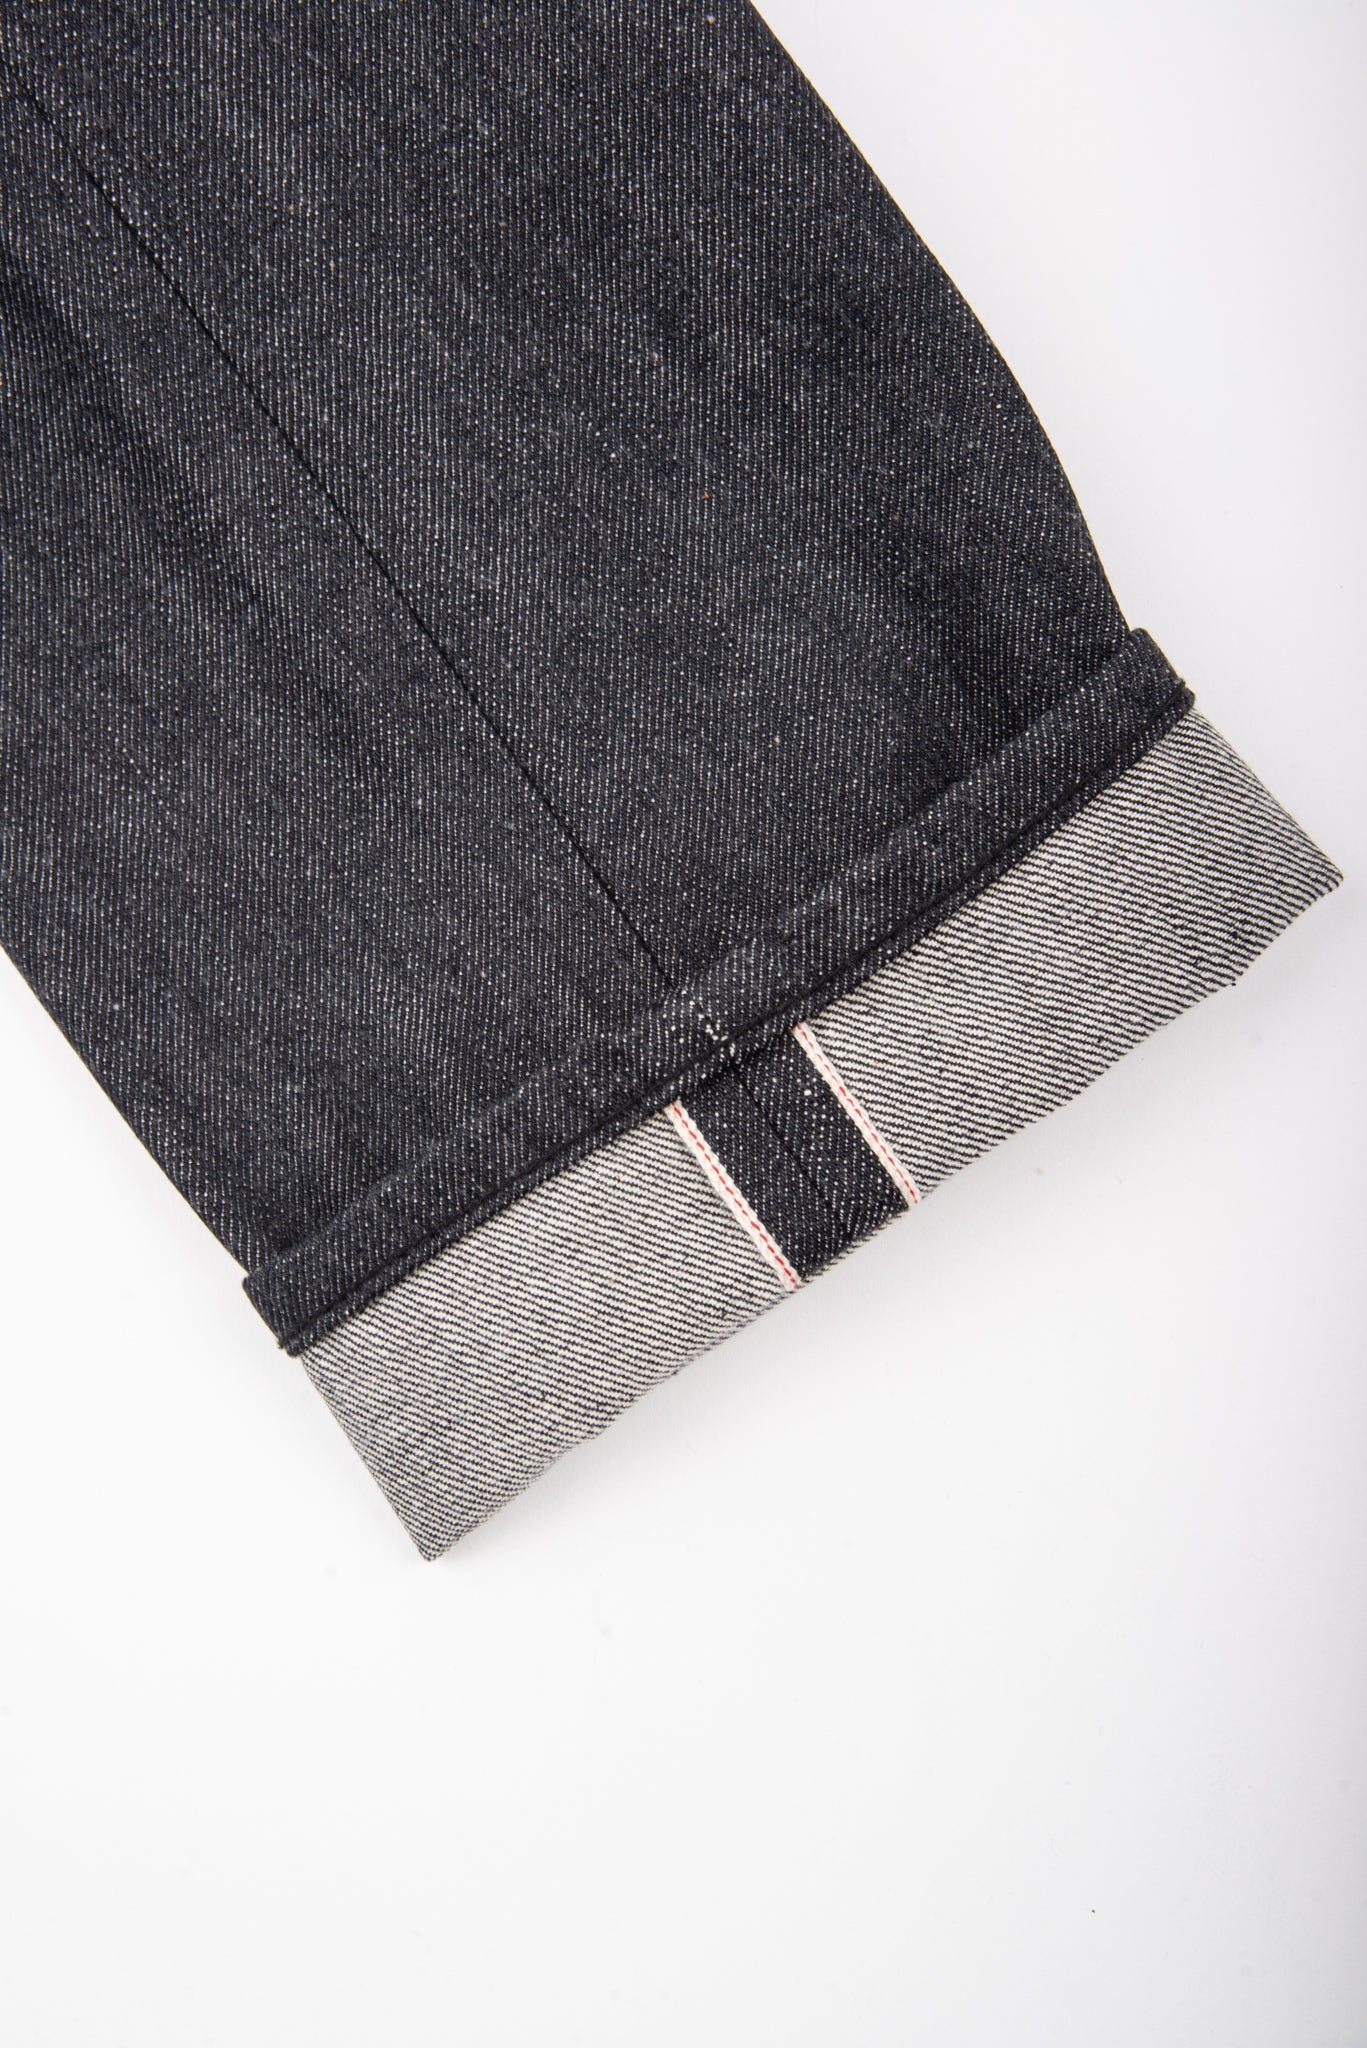 Freenote Cloth - Portola 14oz Charcoal Selvedge Denim - City Workshop Men's Supply Co.